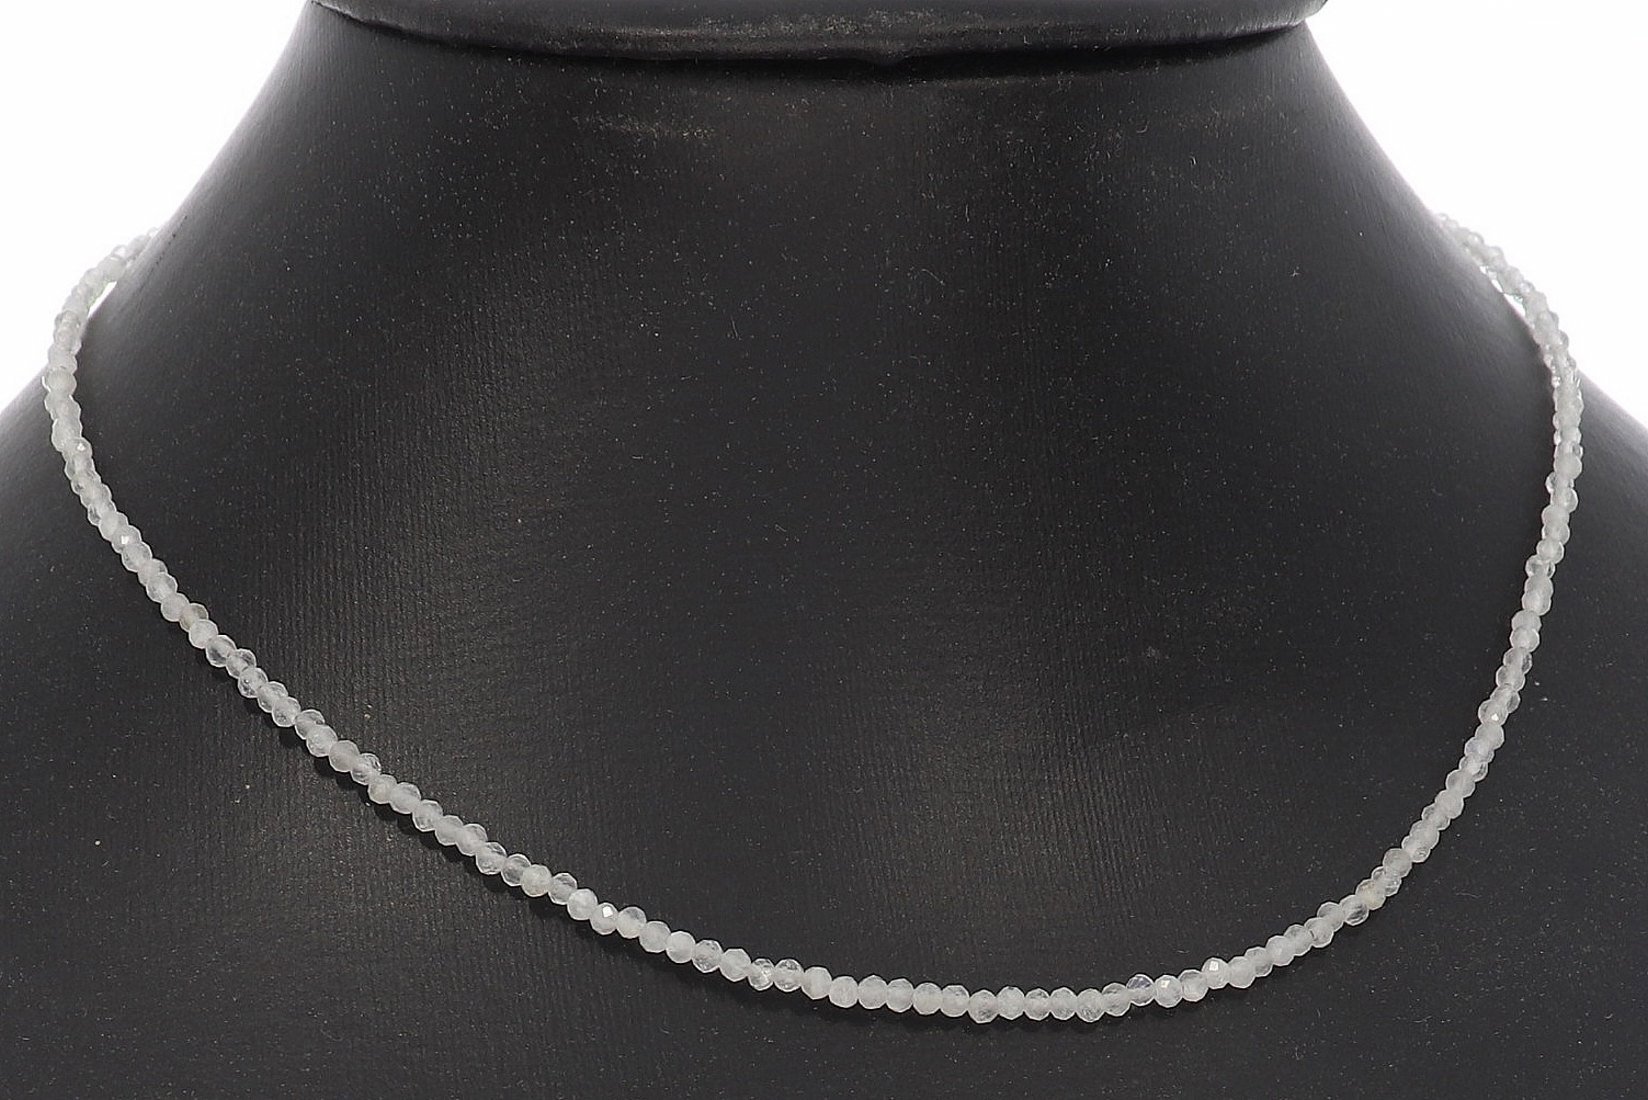 Regenbogen Mondstein Kugel Halskette facettiert Silber farben 2mm - 40-45cm Kettenverlängerer KK334